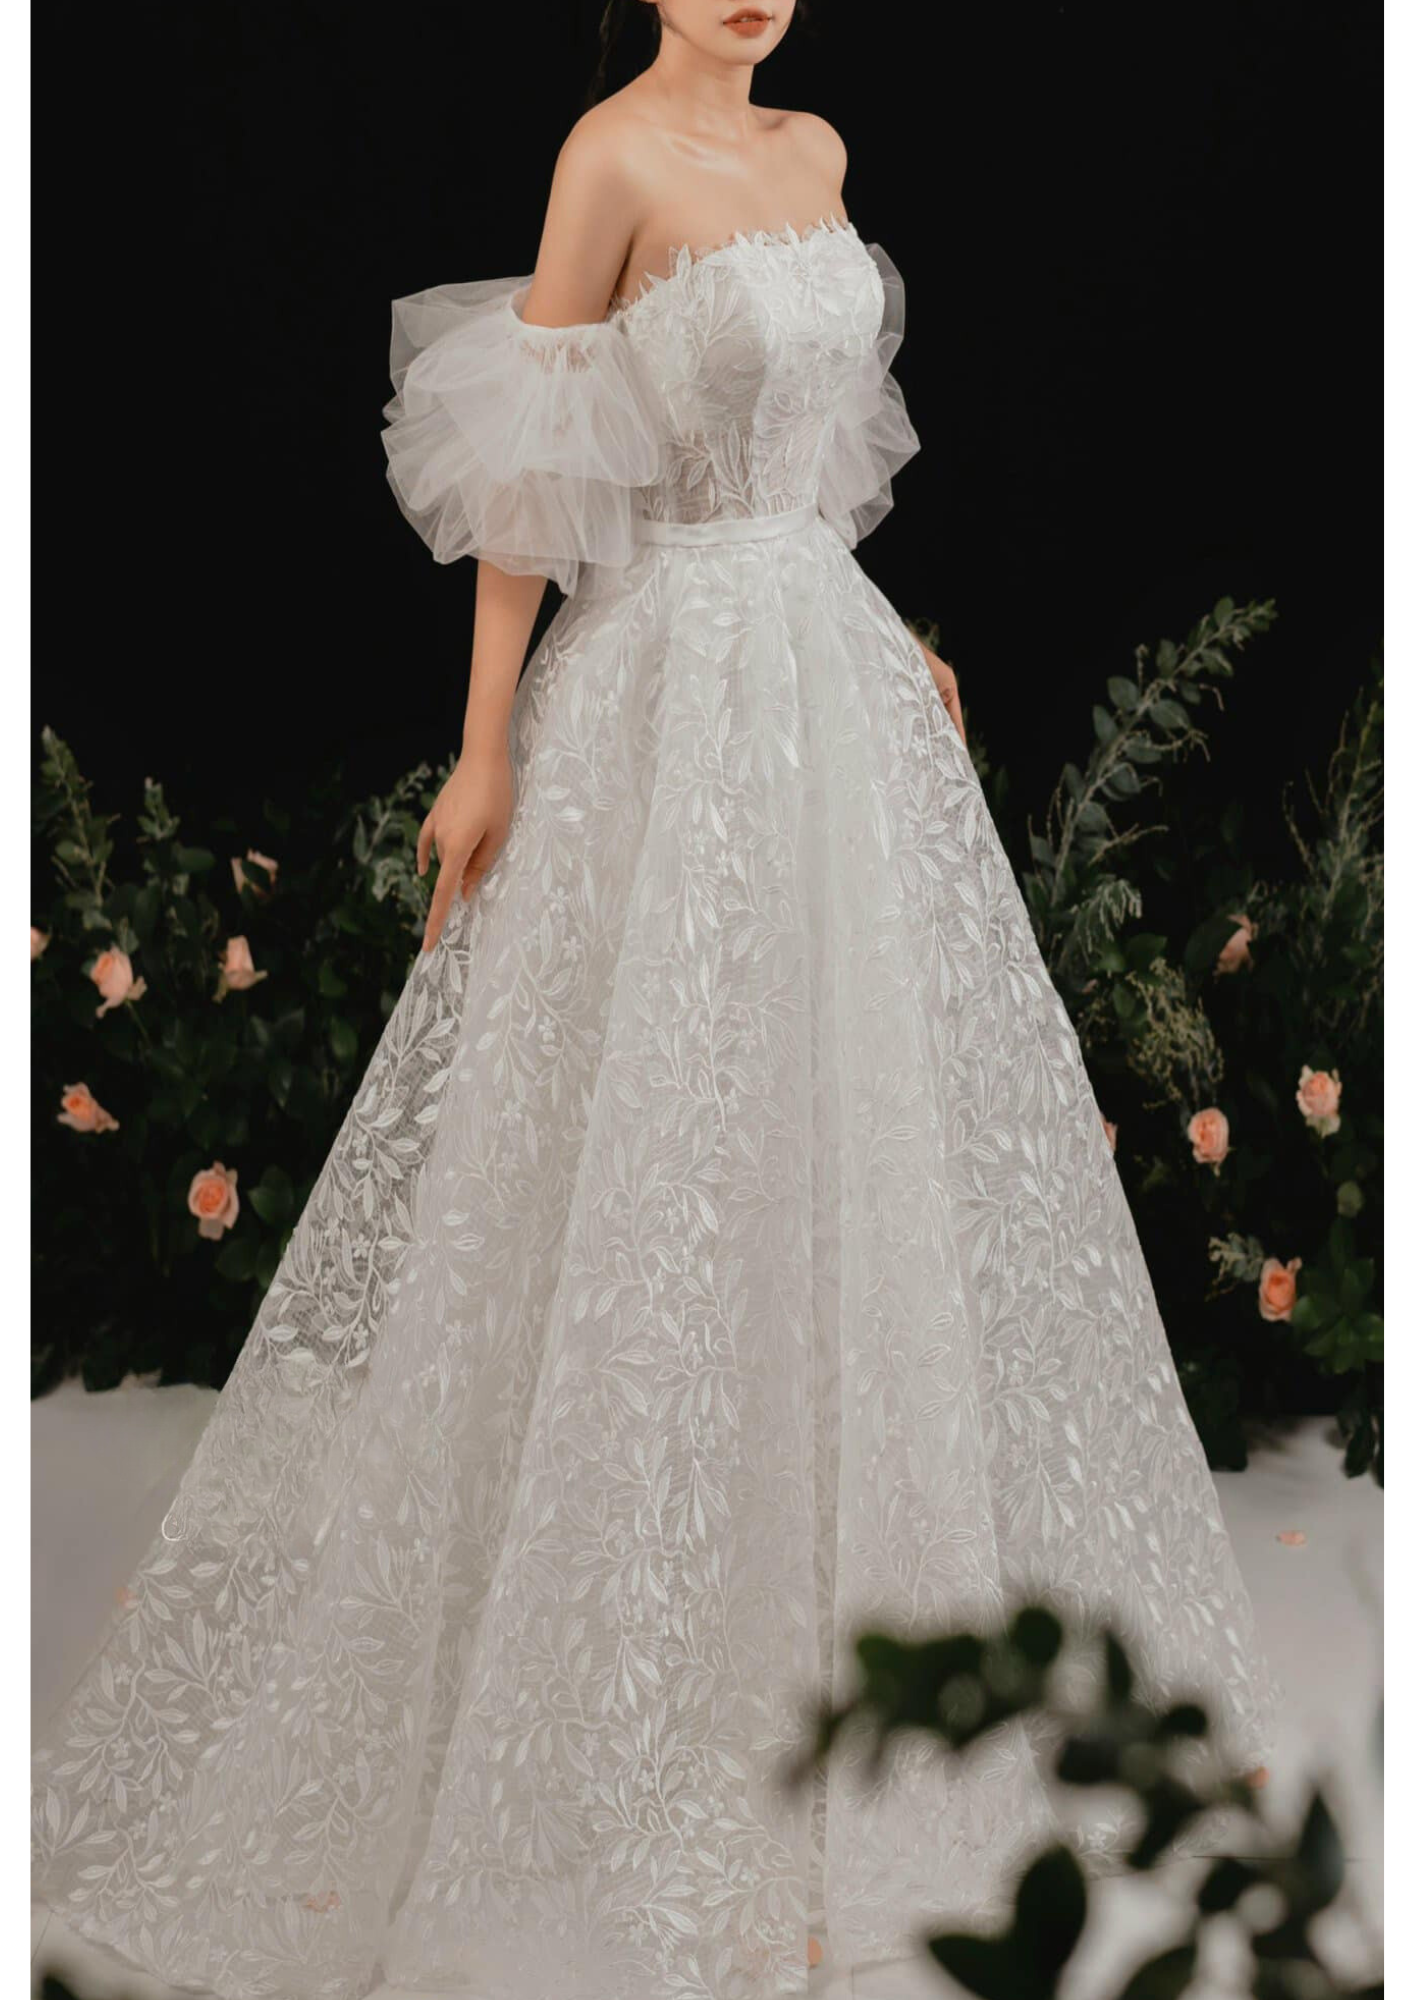 Wedding dress - 3122